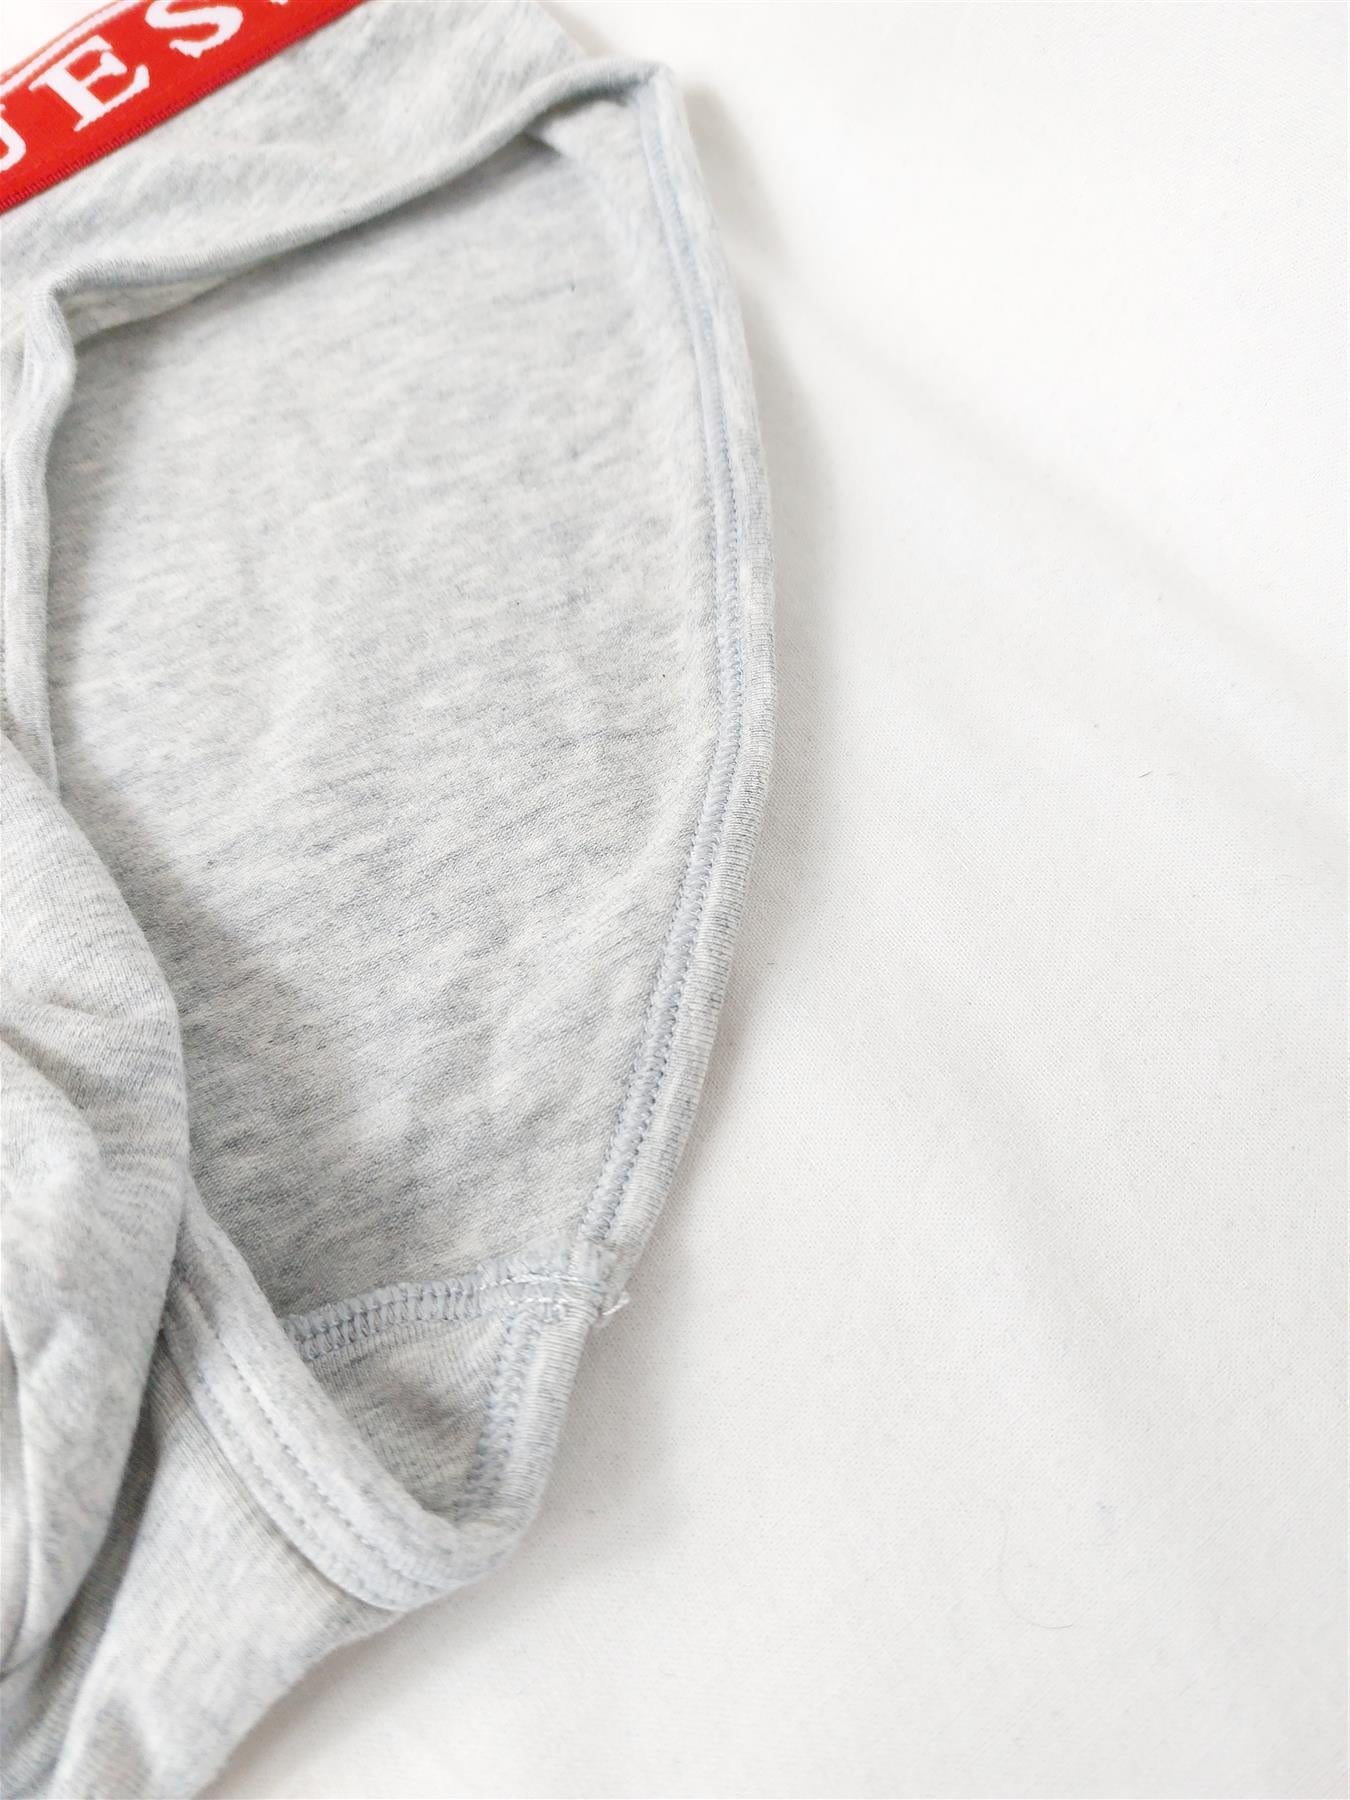 Guess Men's Briefs Underpants Designer Cotton Rich Jersey Elasticated Logo Band